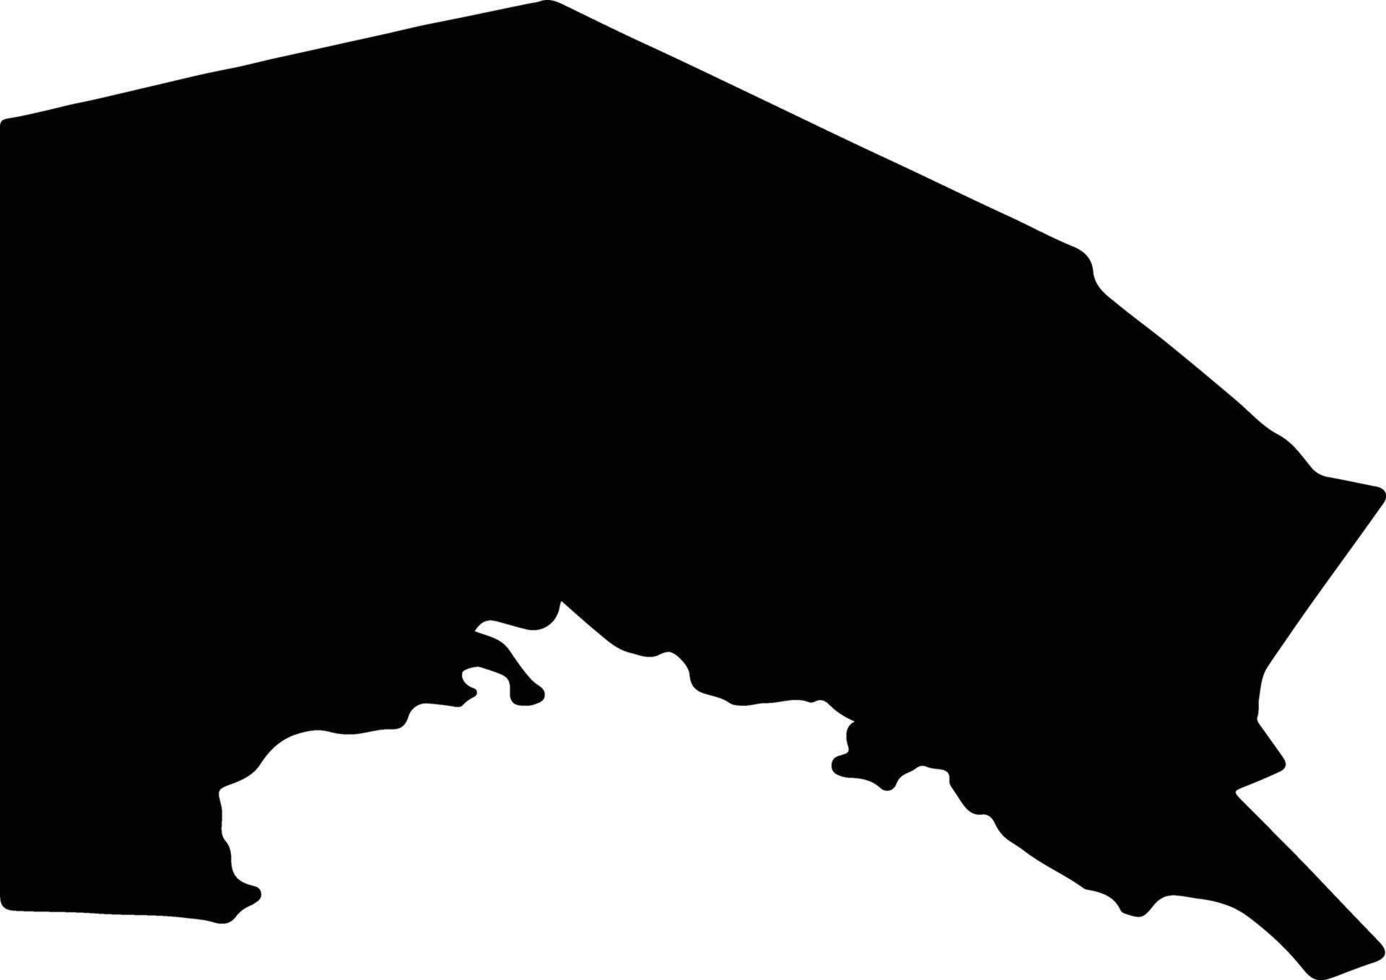 Karakalpakstan Uzbekistan silhouette map vector